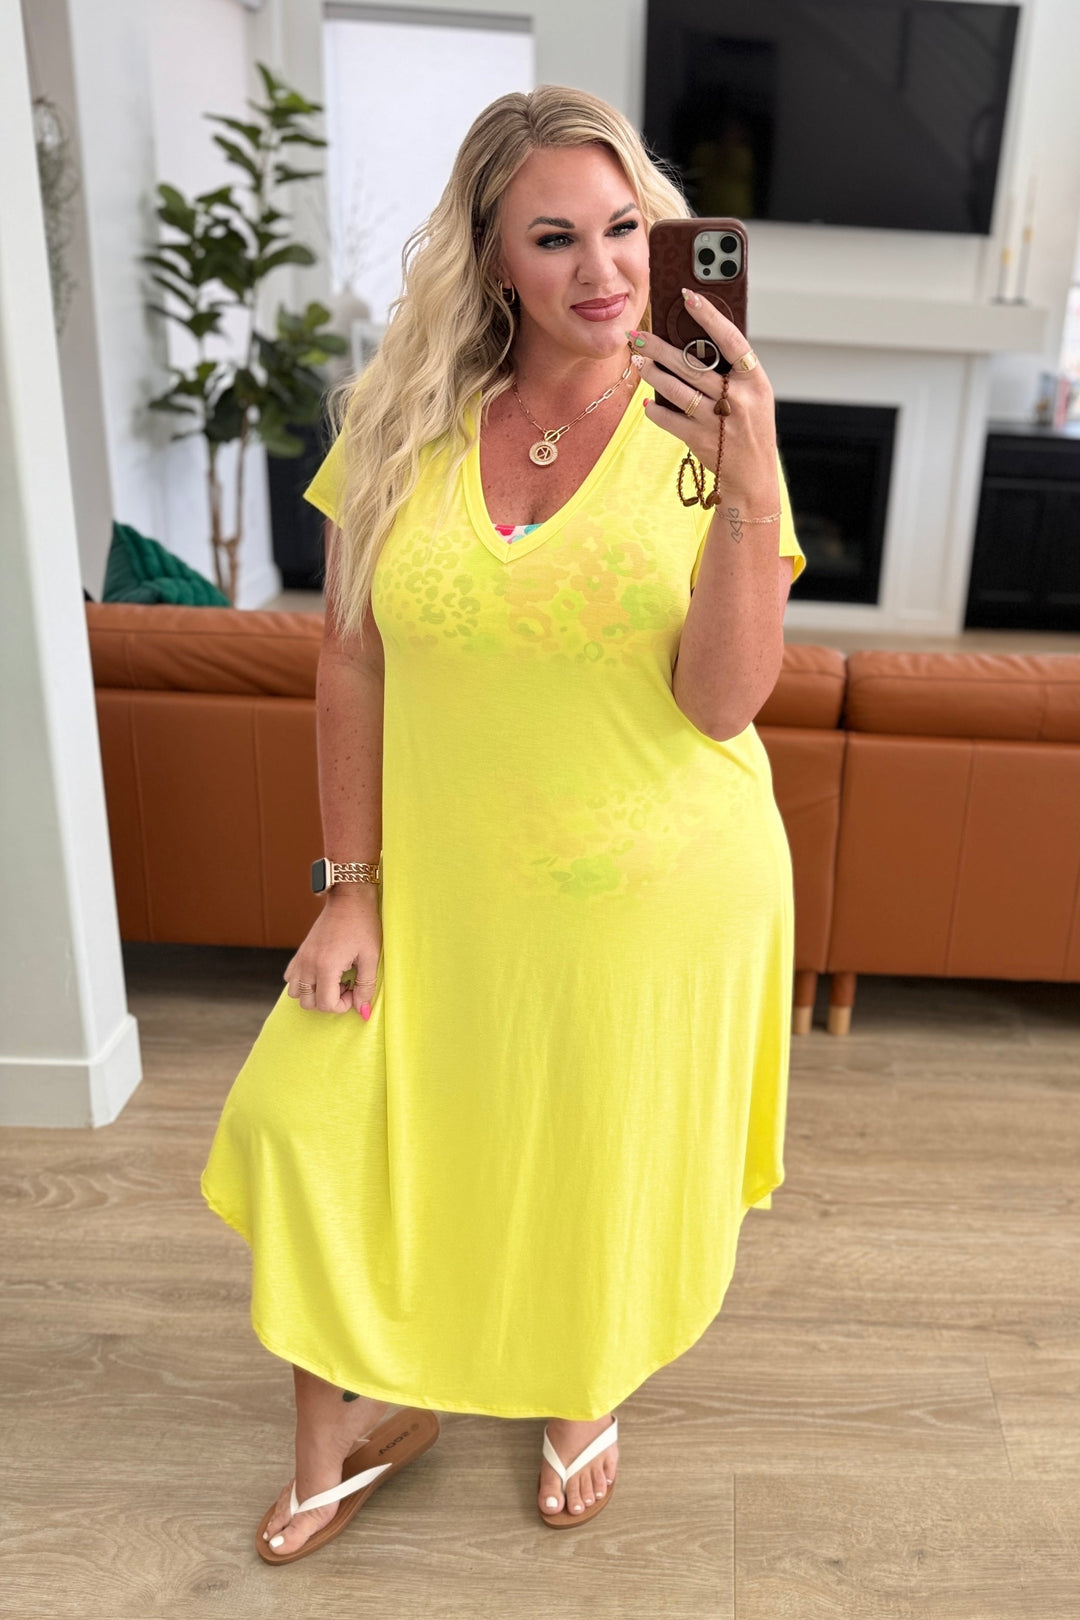 Dolman Sleeve Maxi Dress in Neon Yellow - OW *FINAL SALE*